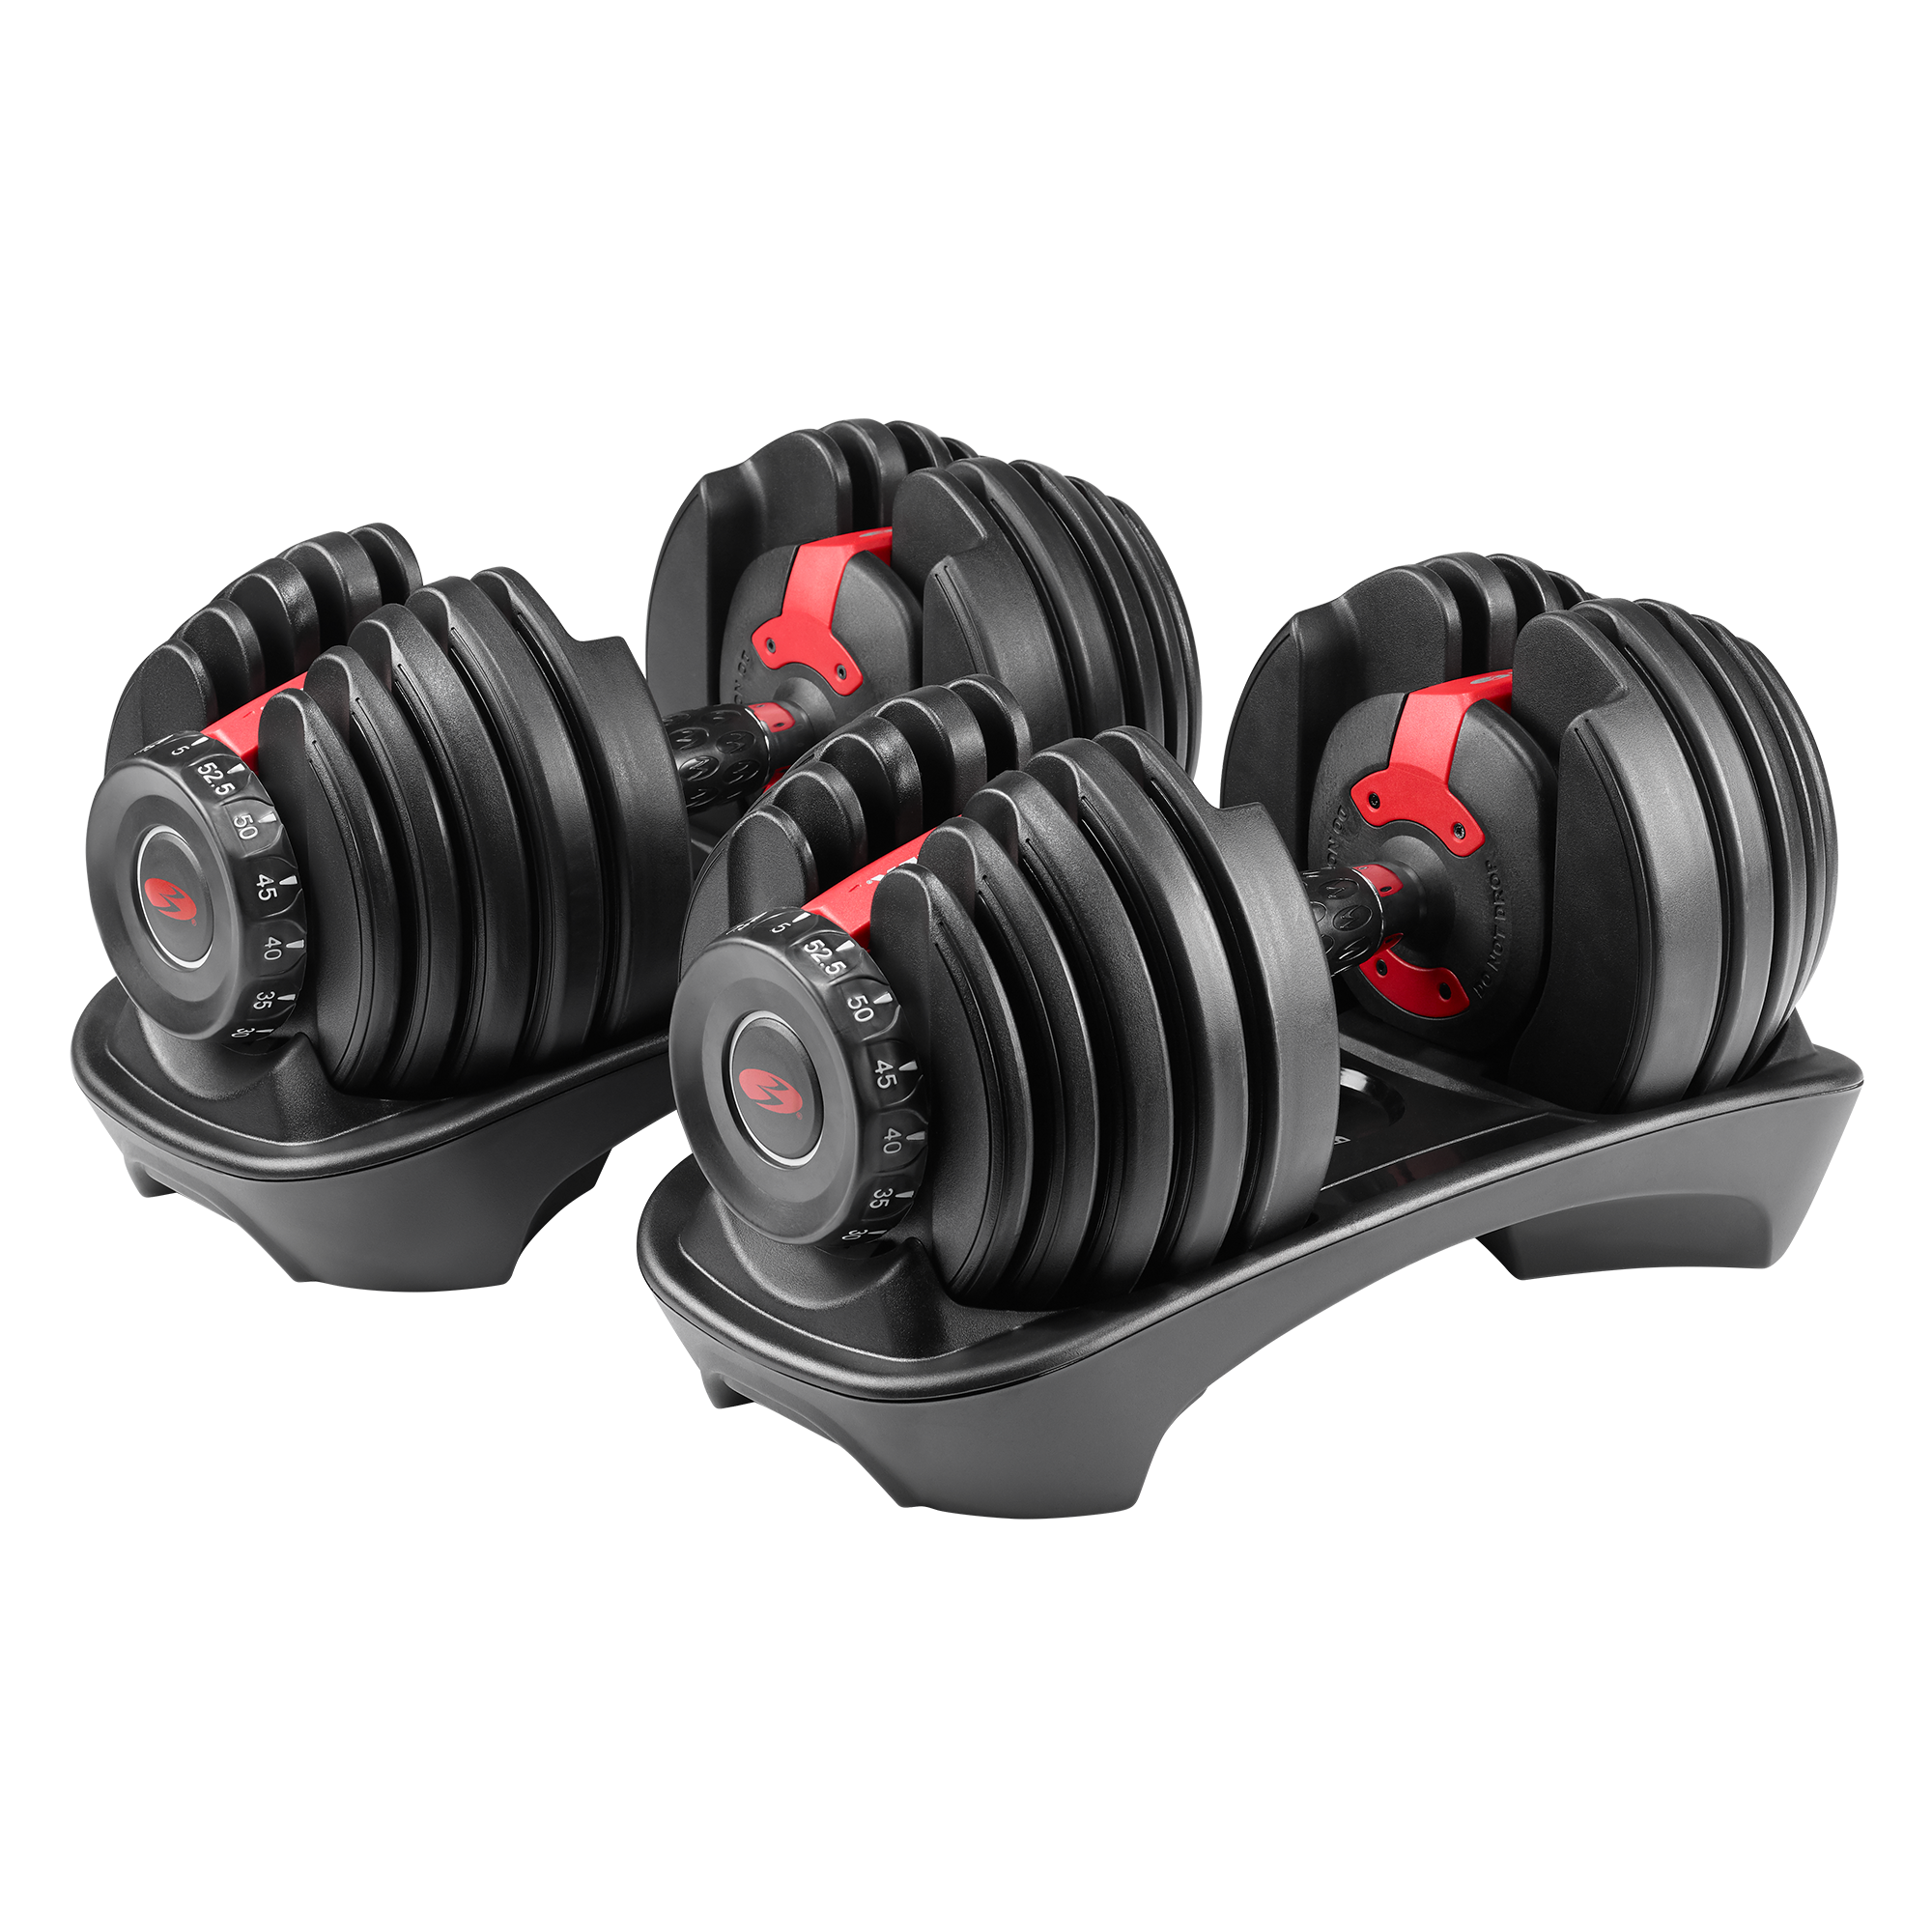 Bowflex Dumbbells Versatile Strength Training Solutions